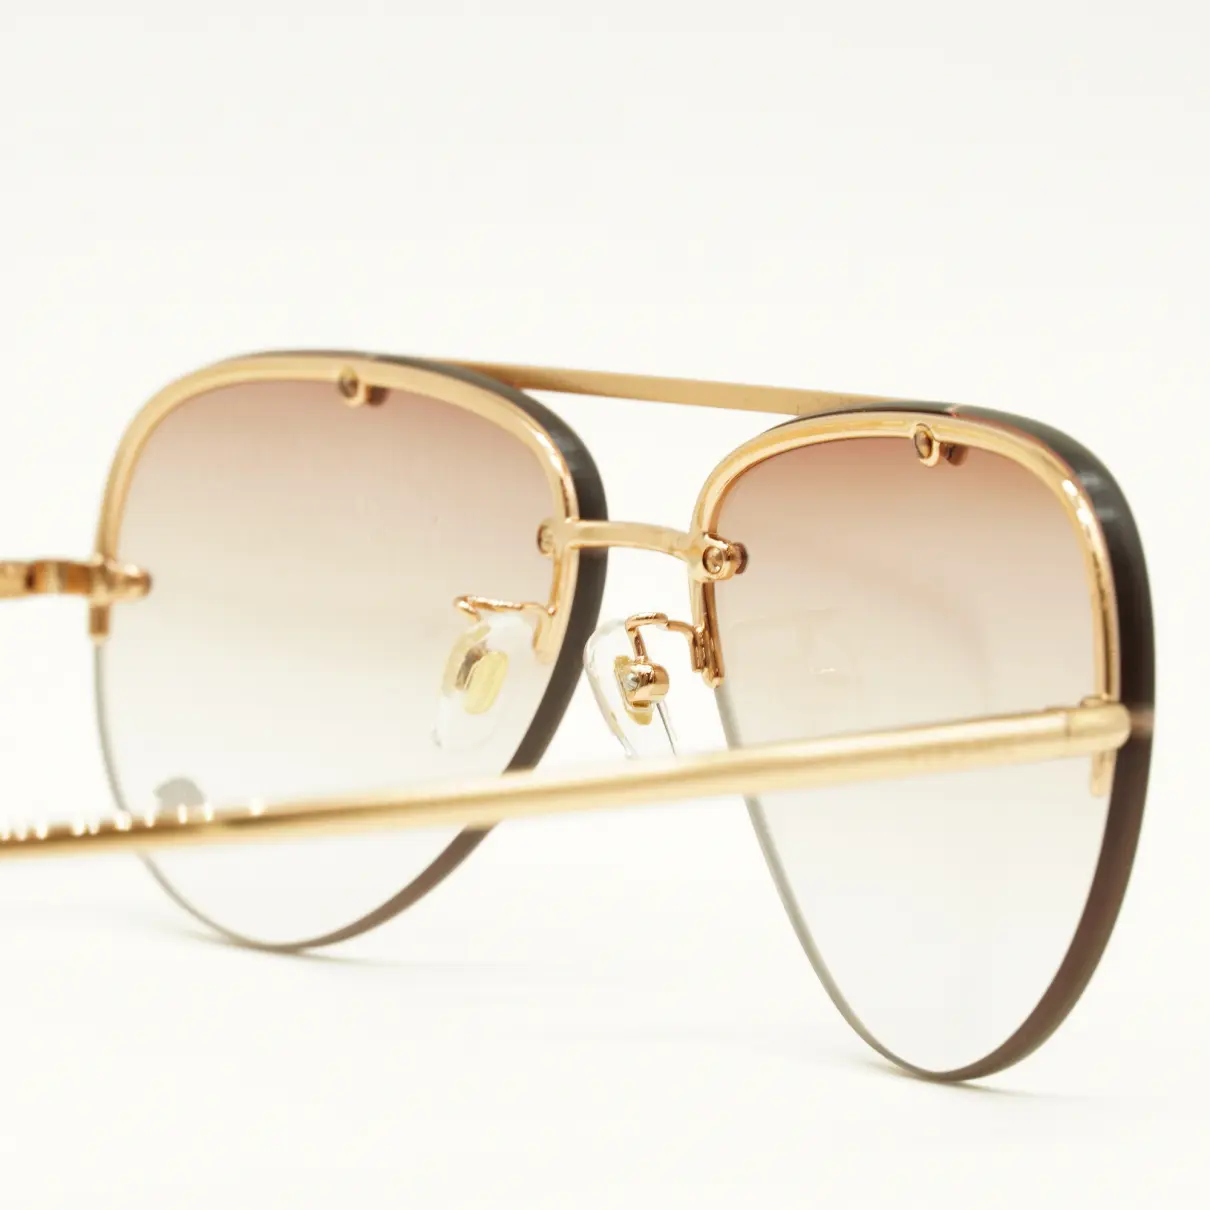 Buy Versace Aviator sunglasses online